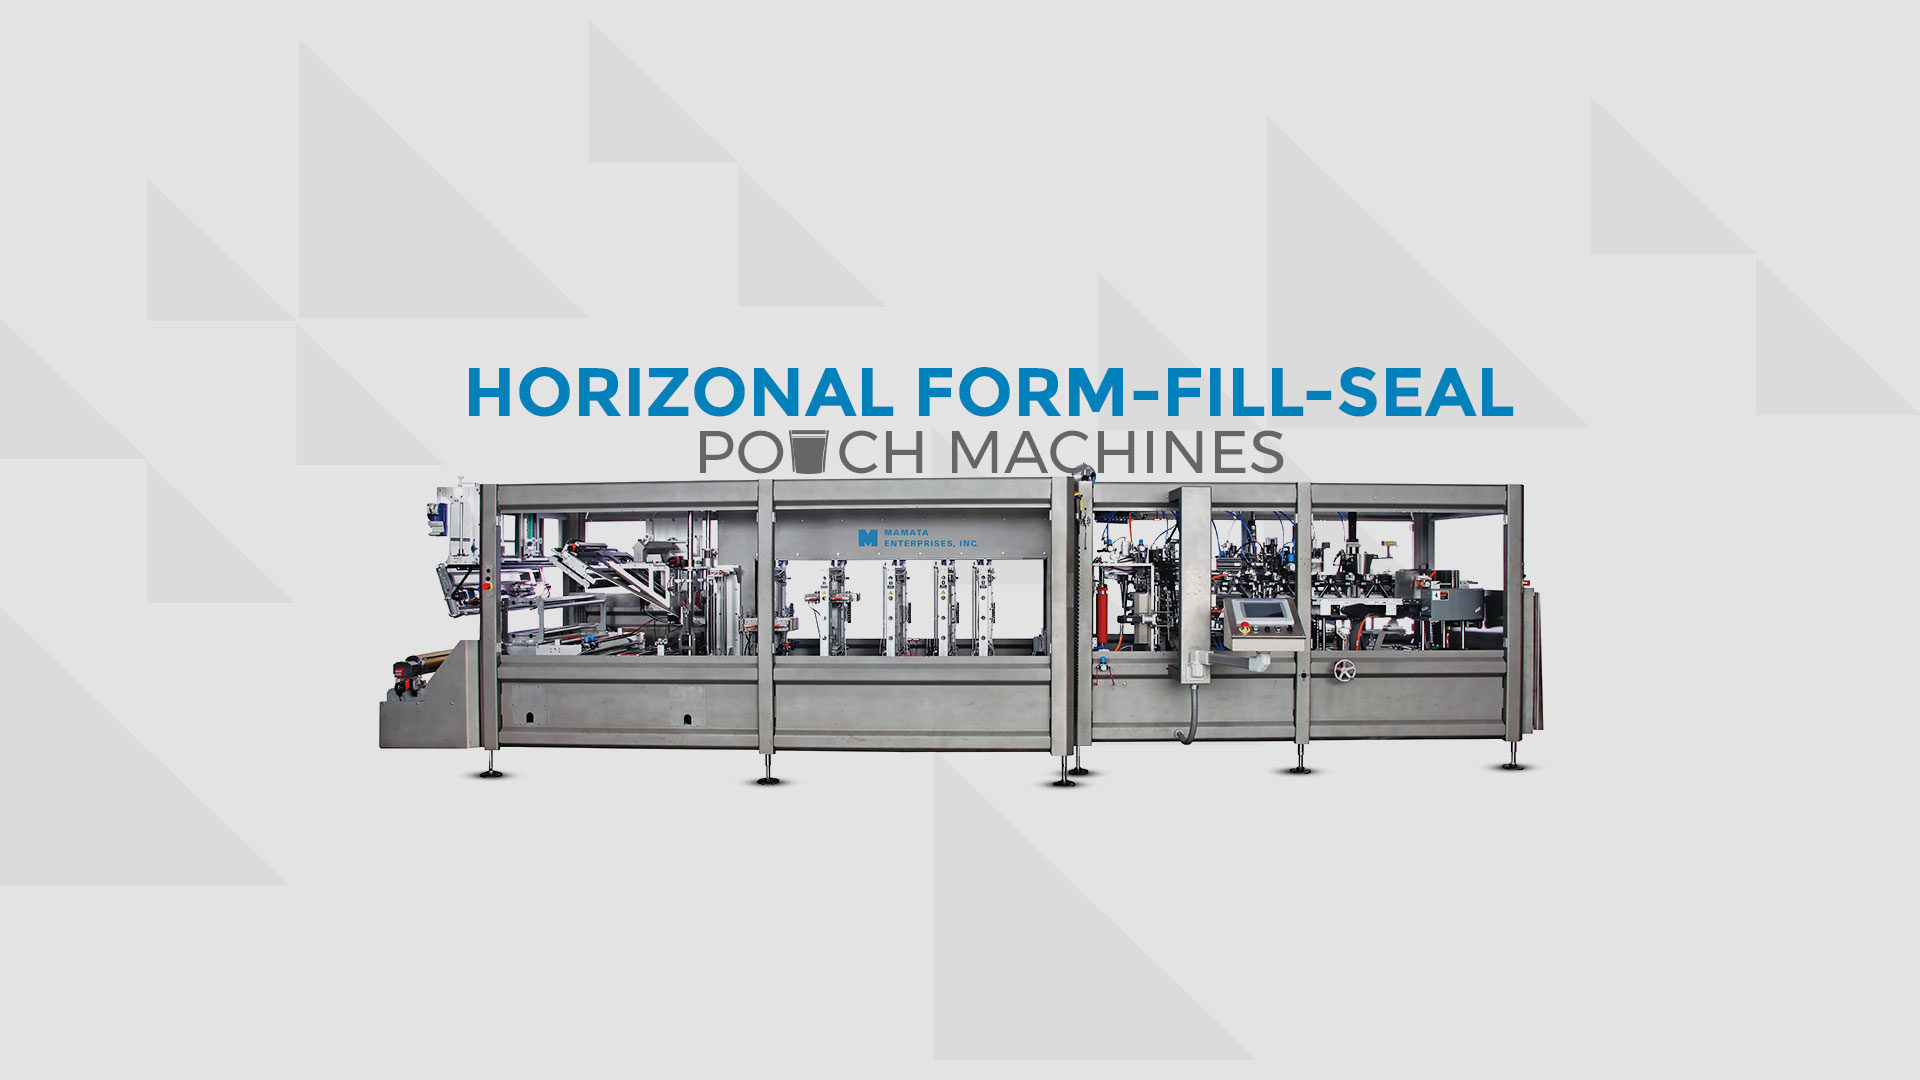 horizonal form-fill-seal (hffs) pouch machine manufacturer